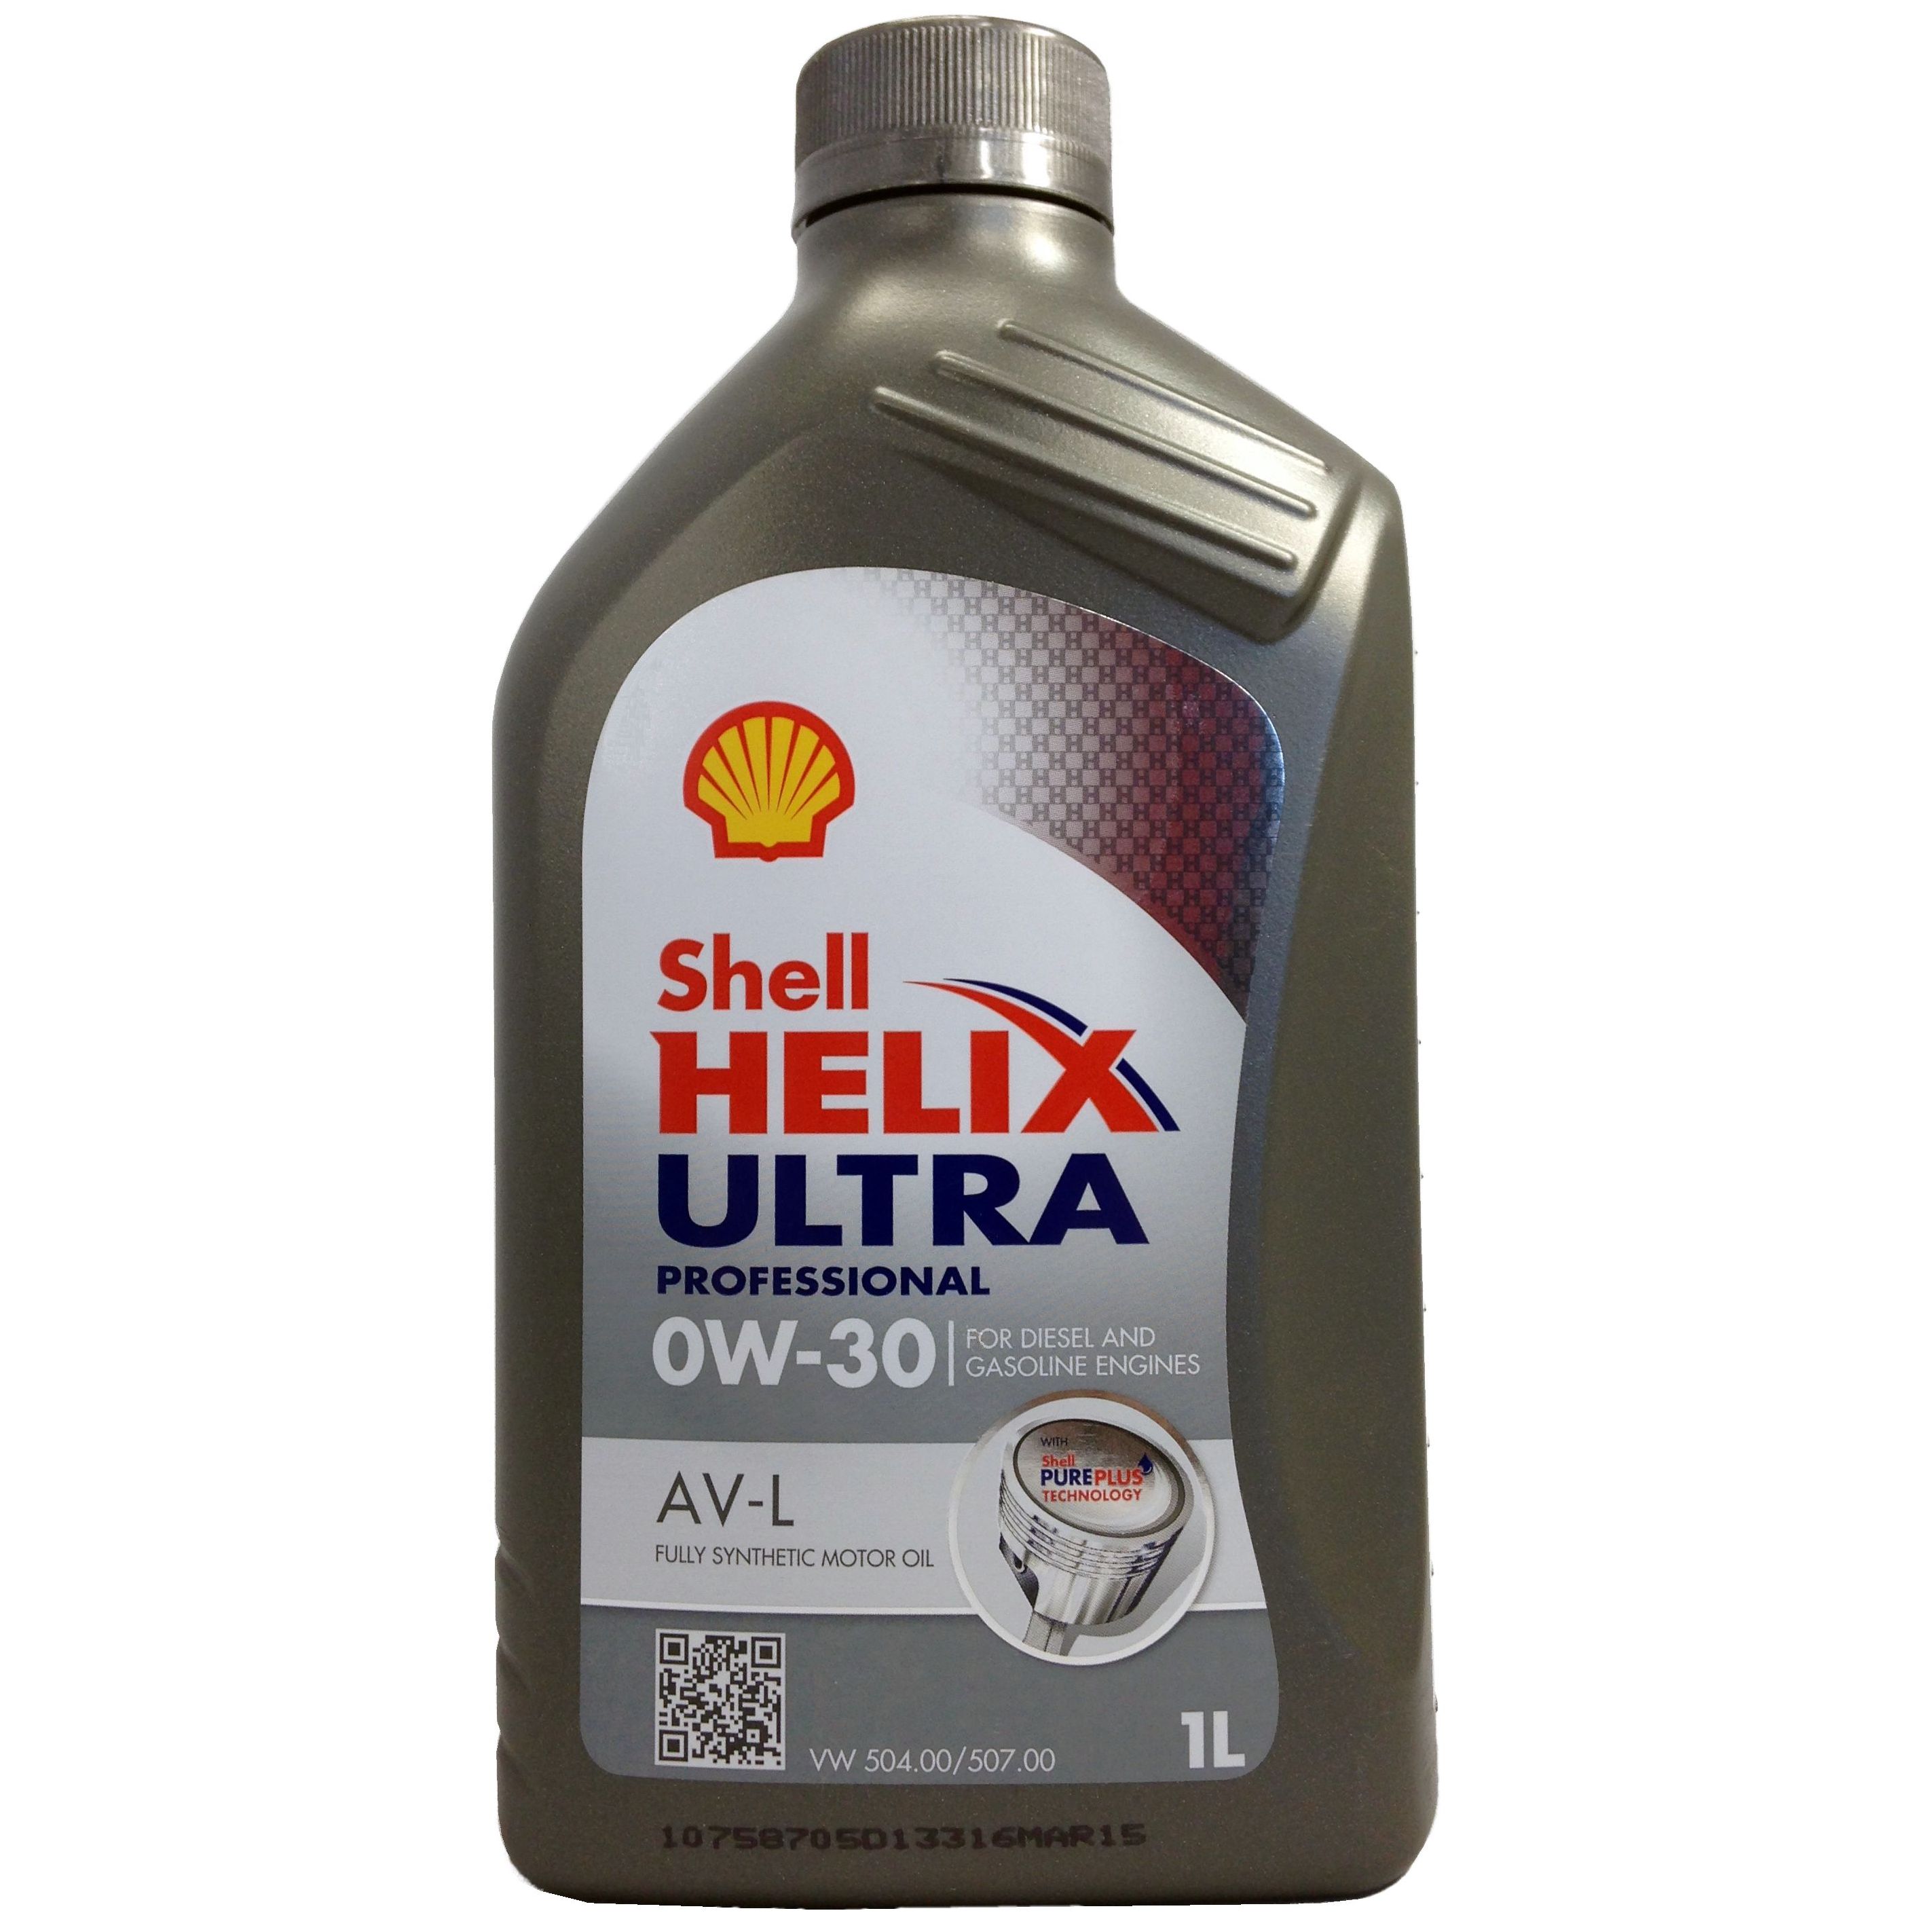 Helix ultra professional av. Моторное масло Shell Helix Ultra professional av-l 0w-30 4 л. Shell Helix Ultra professional av-l 0w-30 4 л артикул. Shell AVL 0w30. Шелл Хеликс ультра профессионал ar-l5w30.